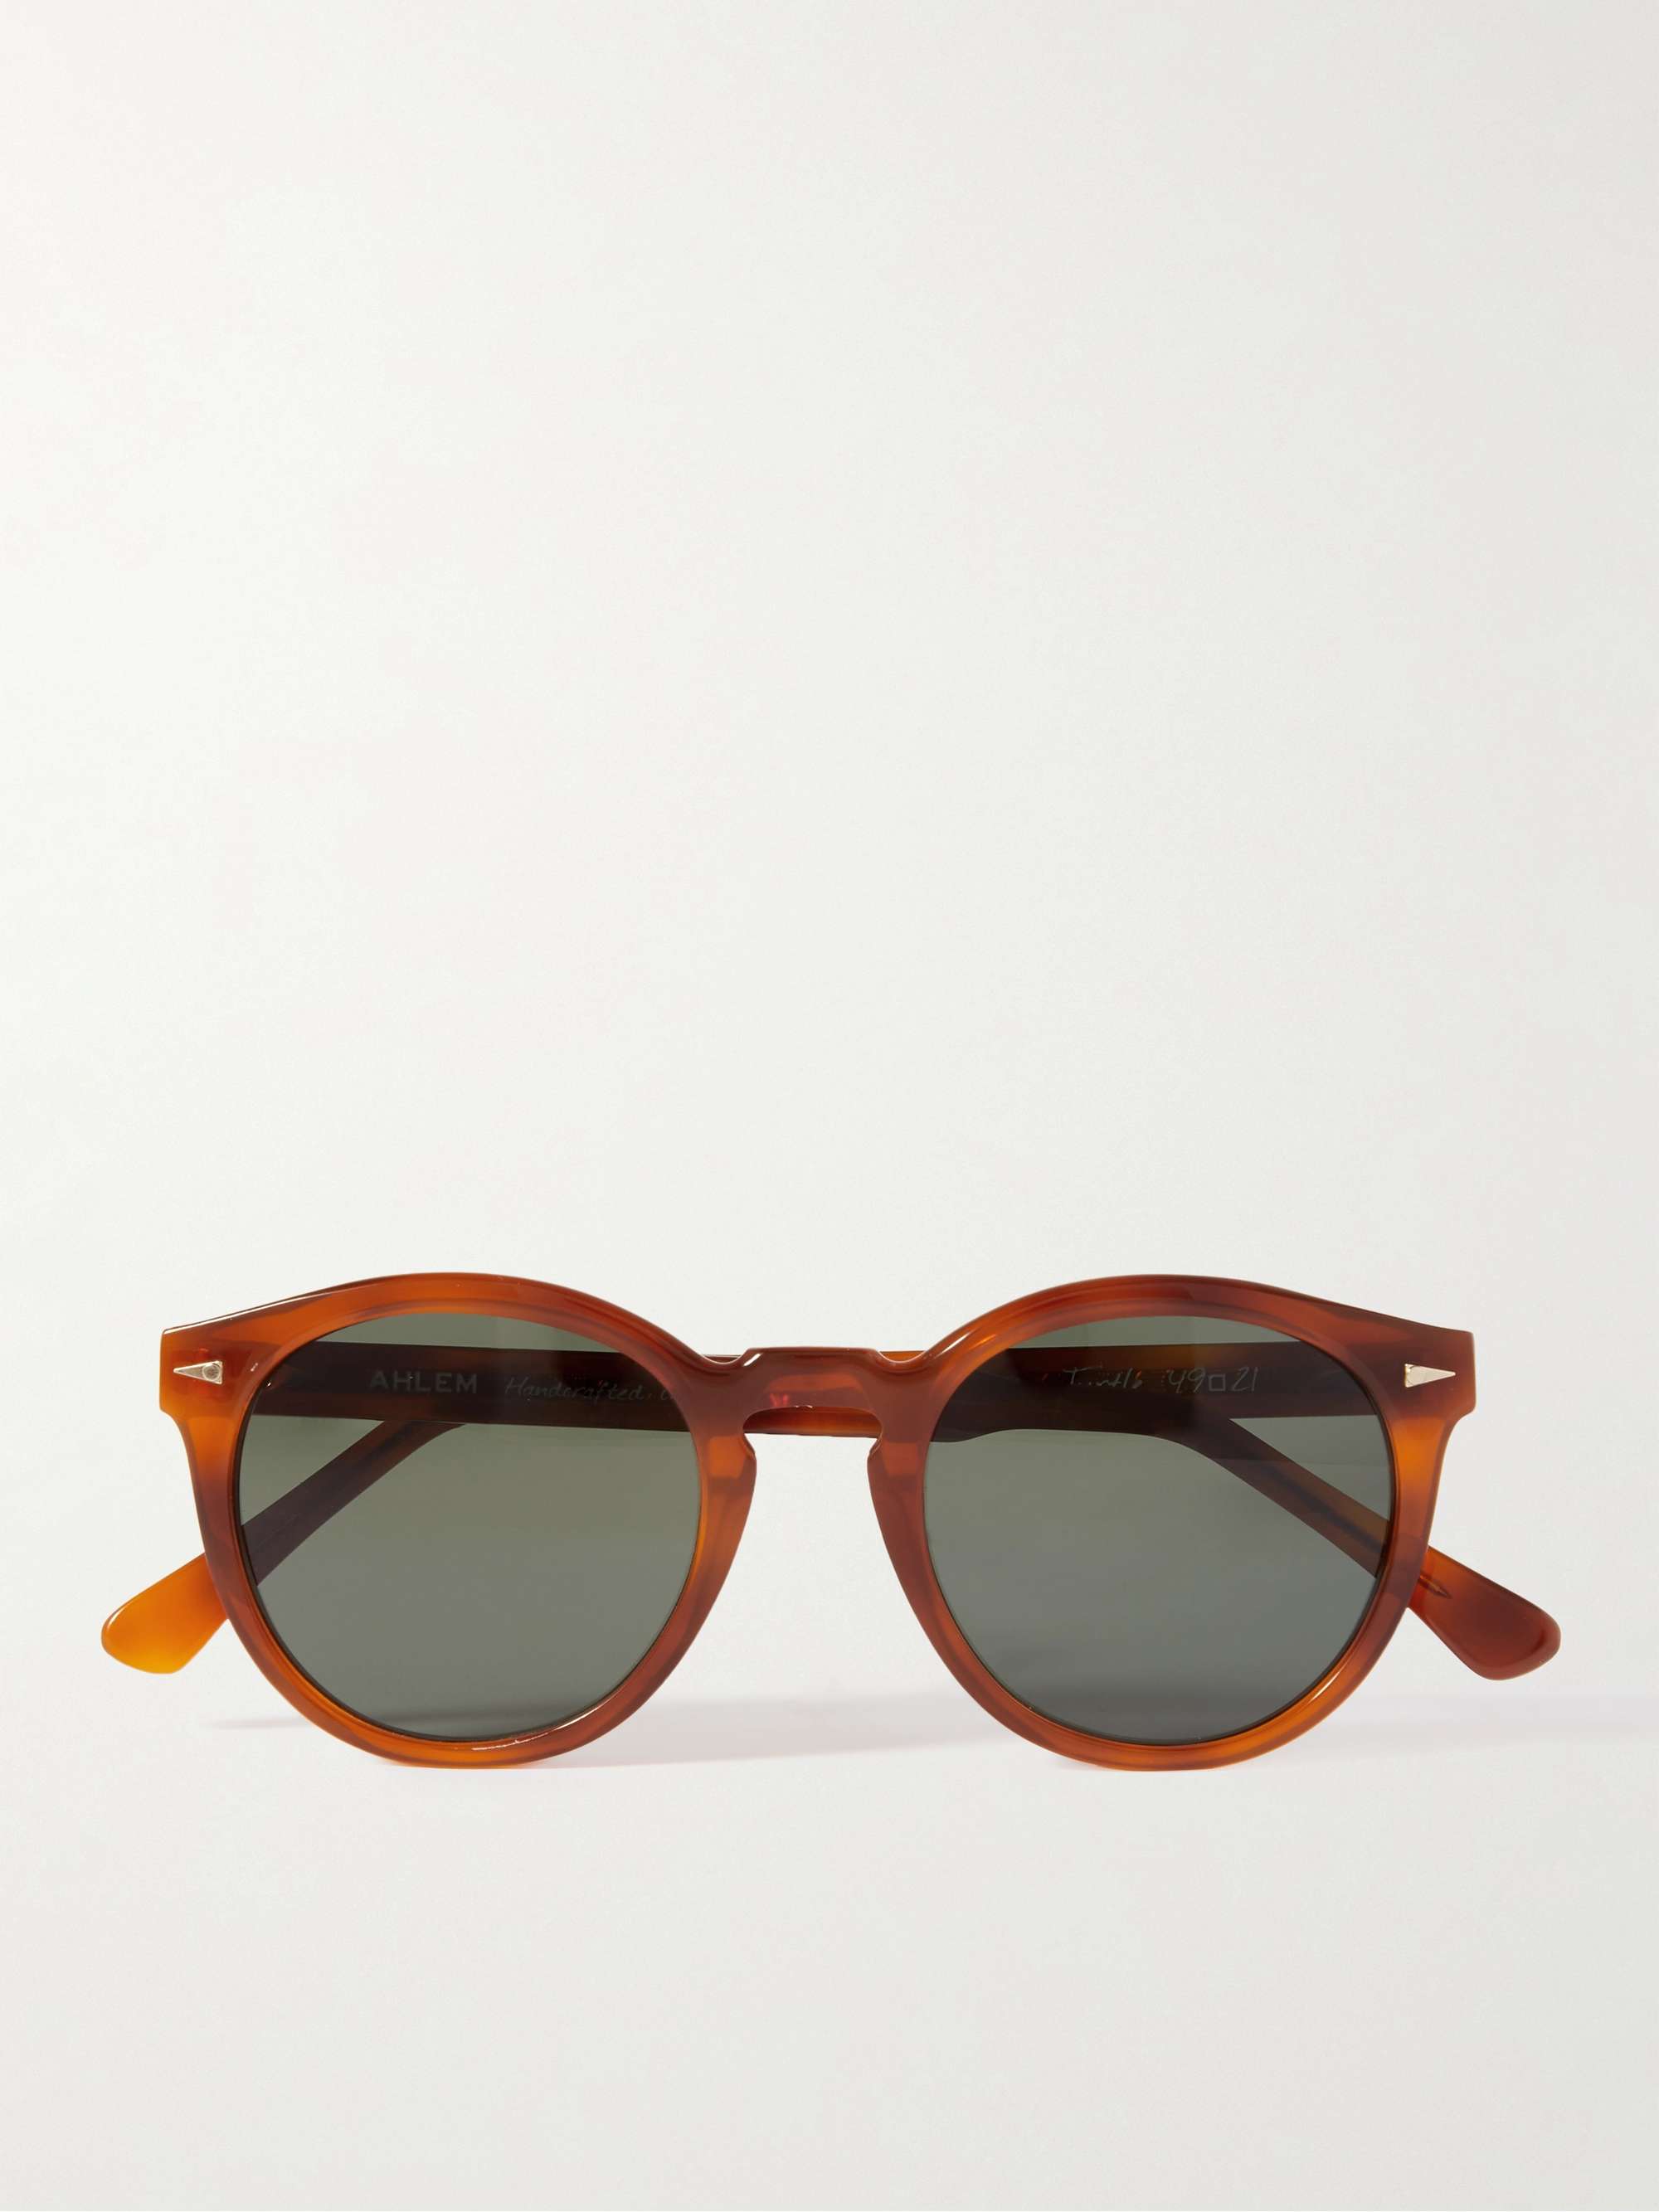 AHLEM St Germain Round-Frame Acetate Sunglasses